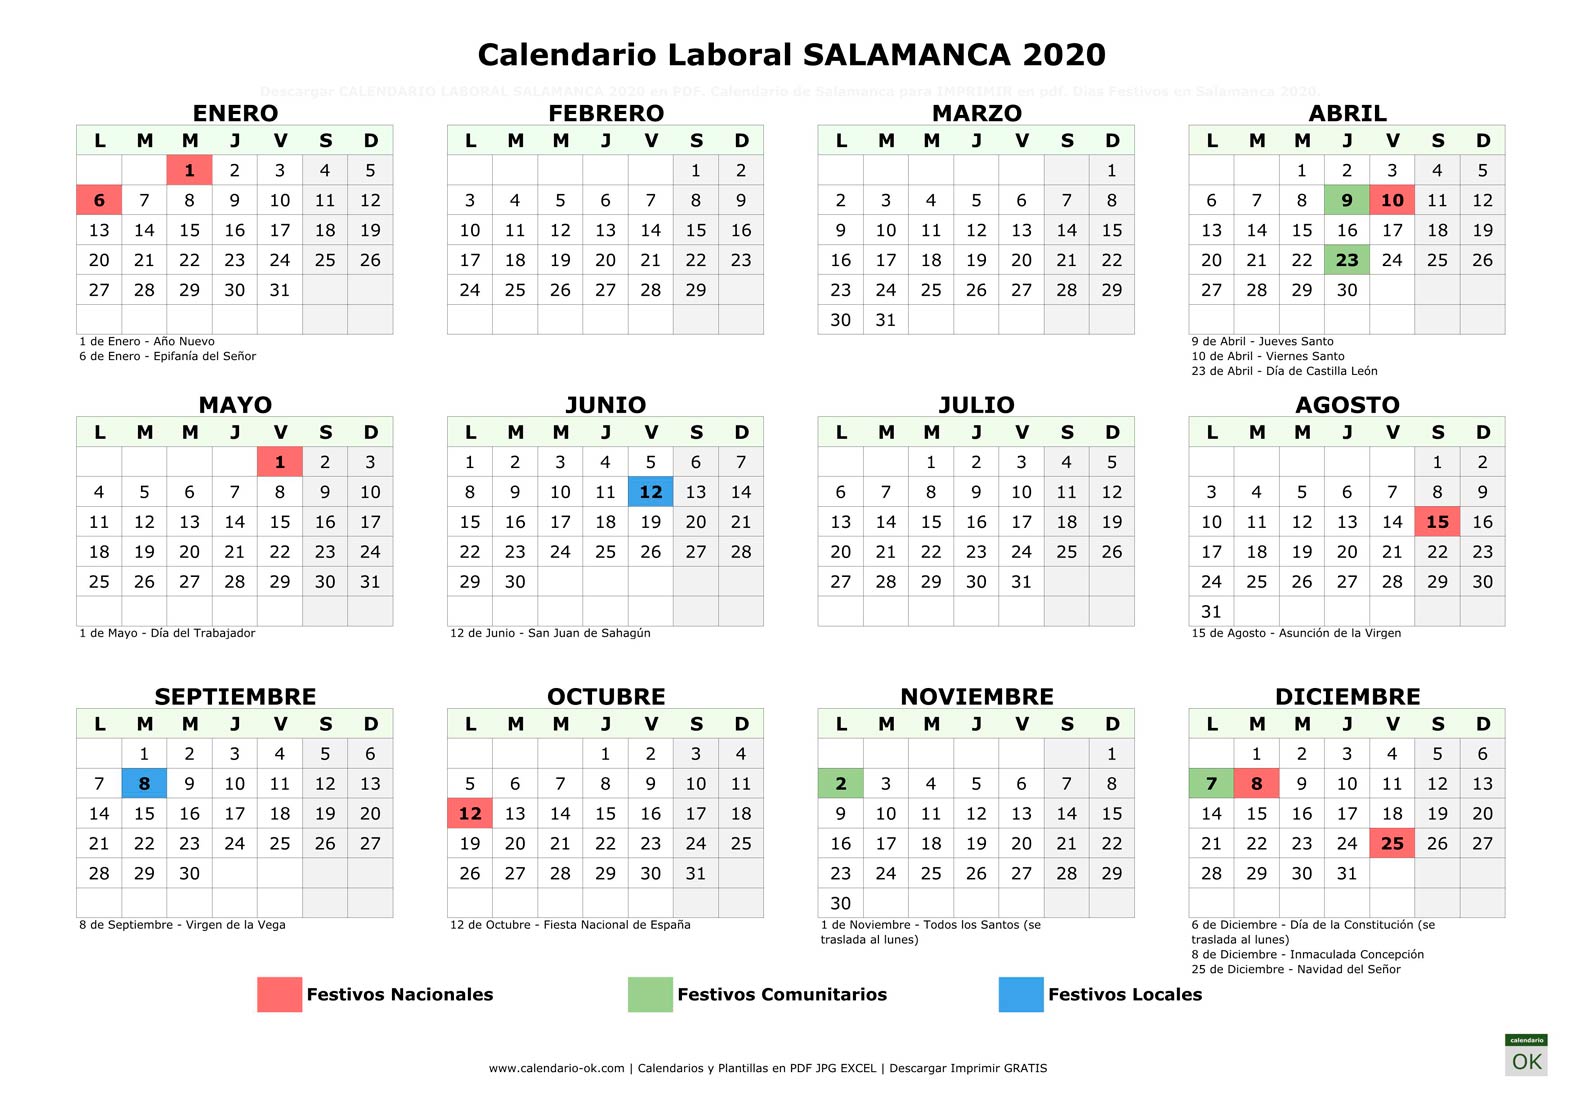 Calendario Laboral SALAMANCA 2020 horizontal